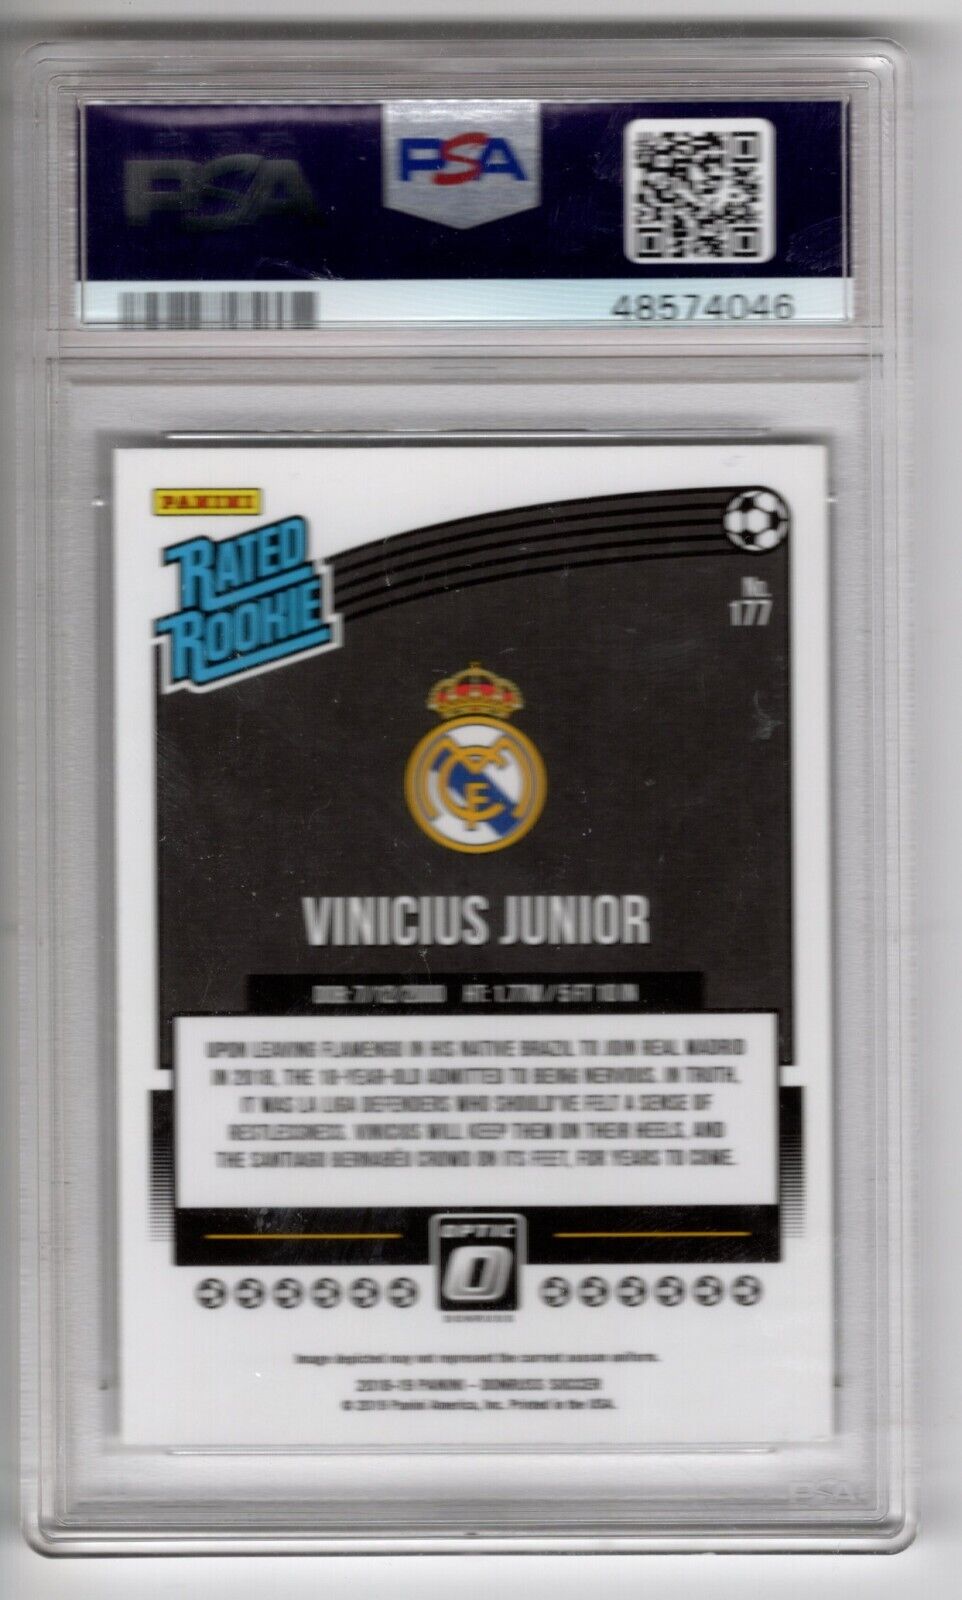 2018 Panini Donruss Optic Soccer #177 Vinicius Junior Rookie Card RC PSA 10 - 643-collectibles